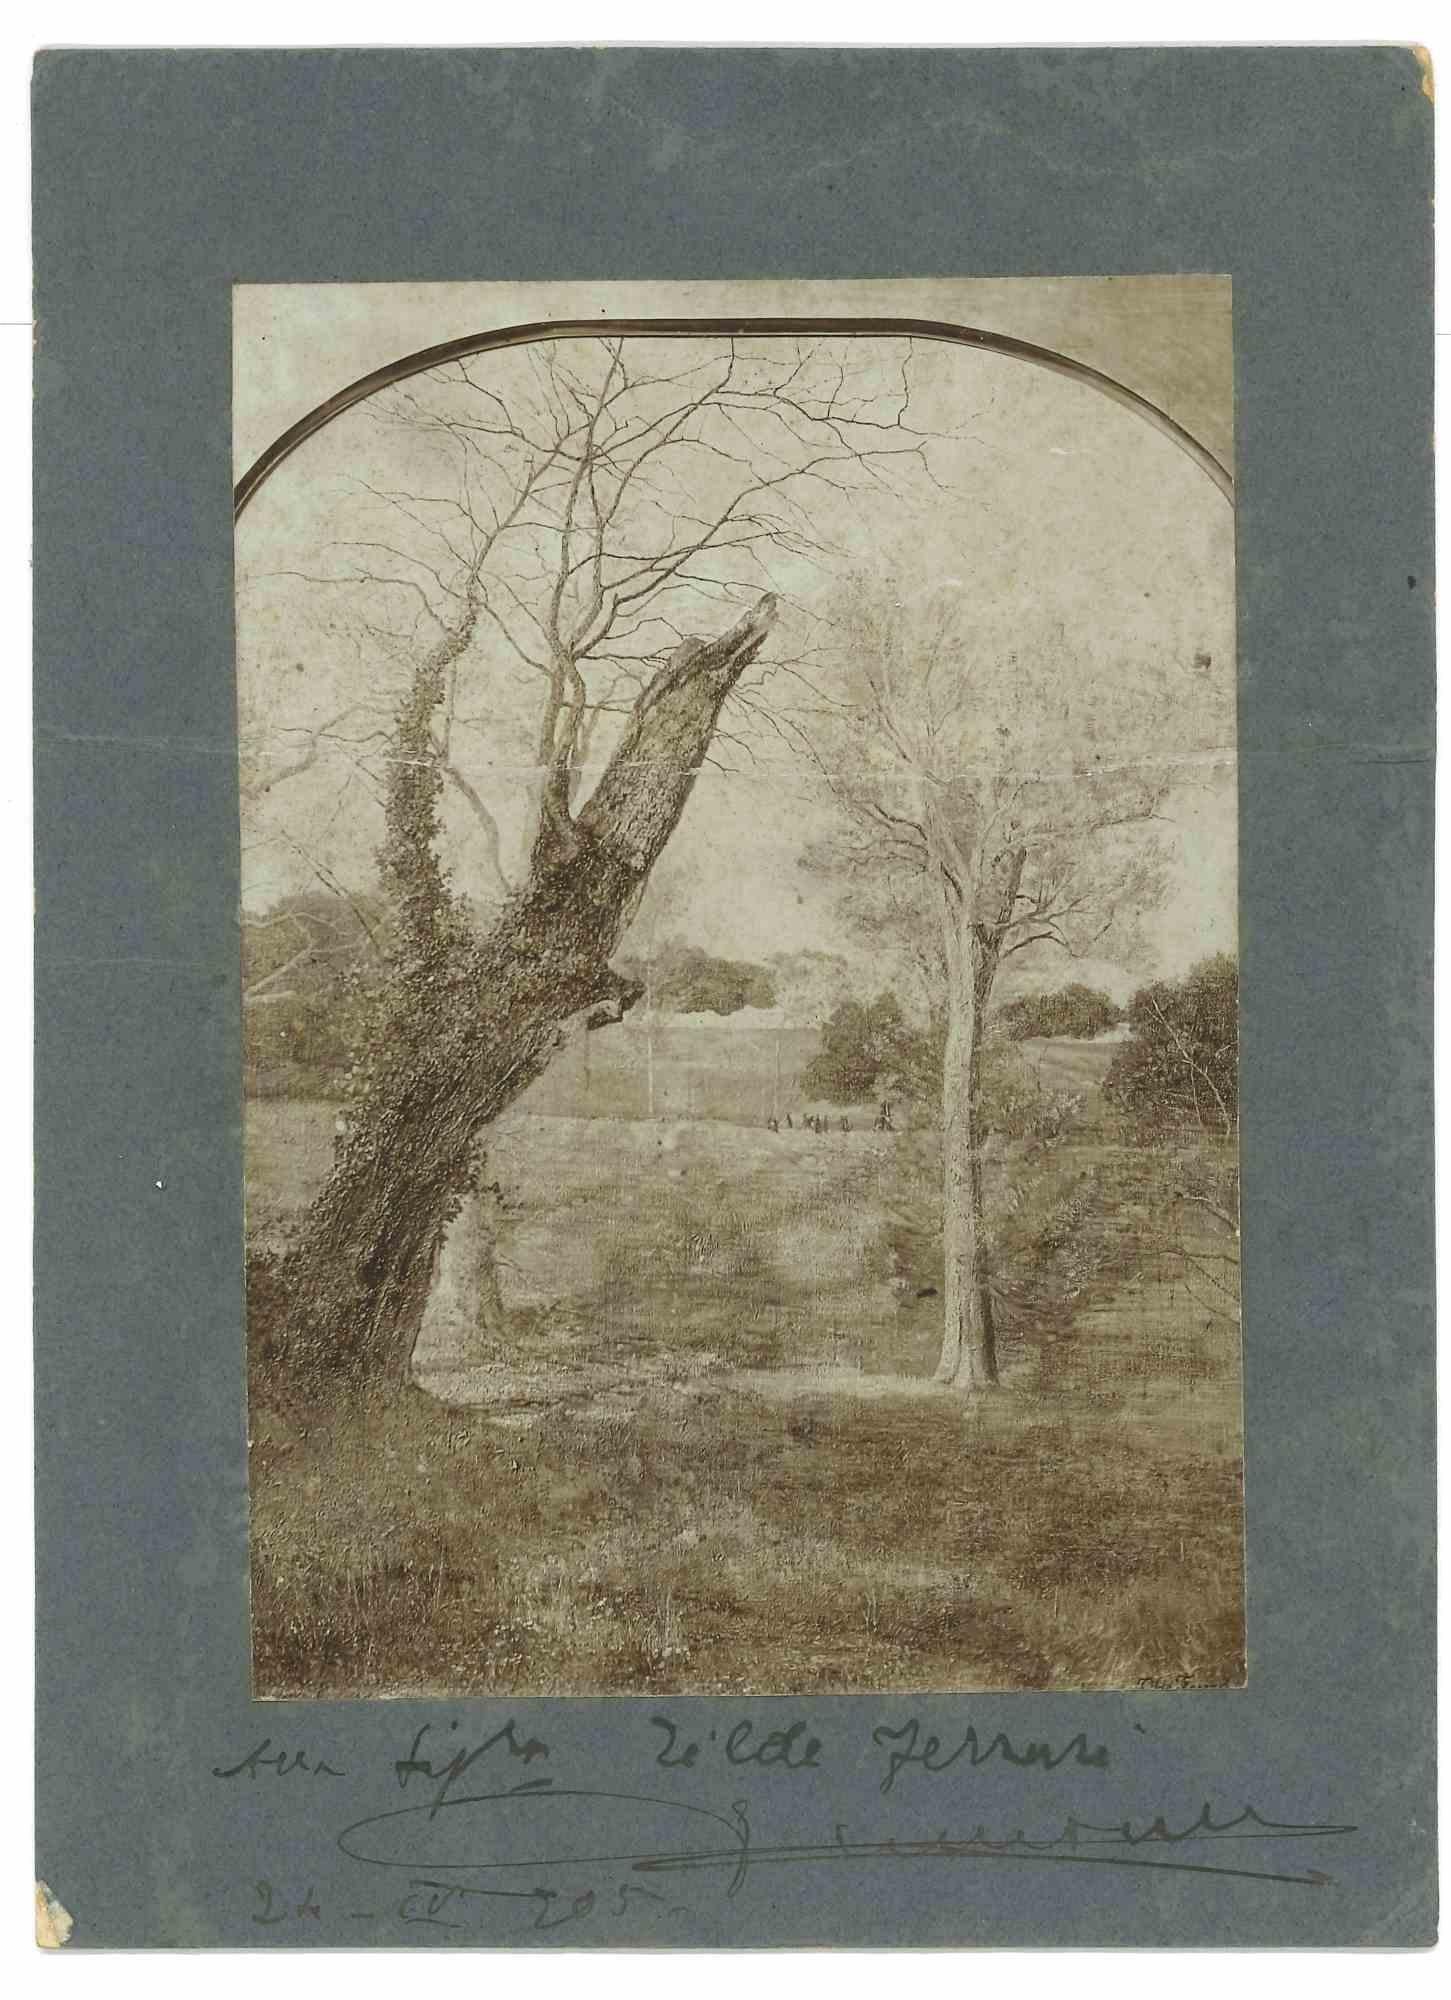 Unknown Portrait Photograph - The Forest - Vintage Photograph - Late 19th century